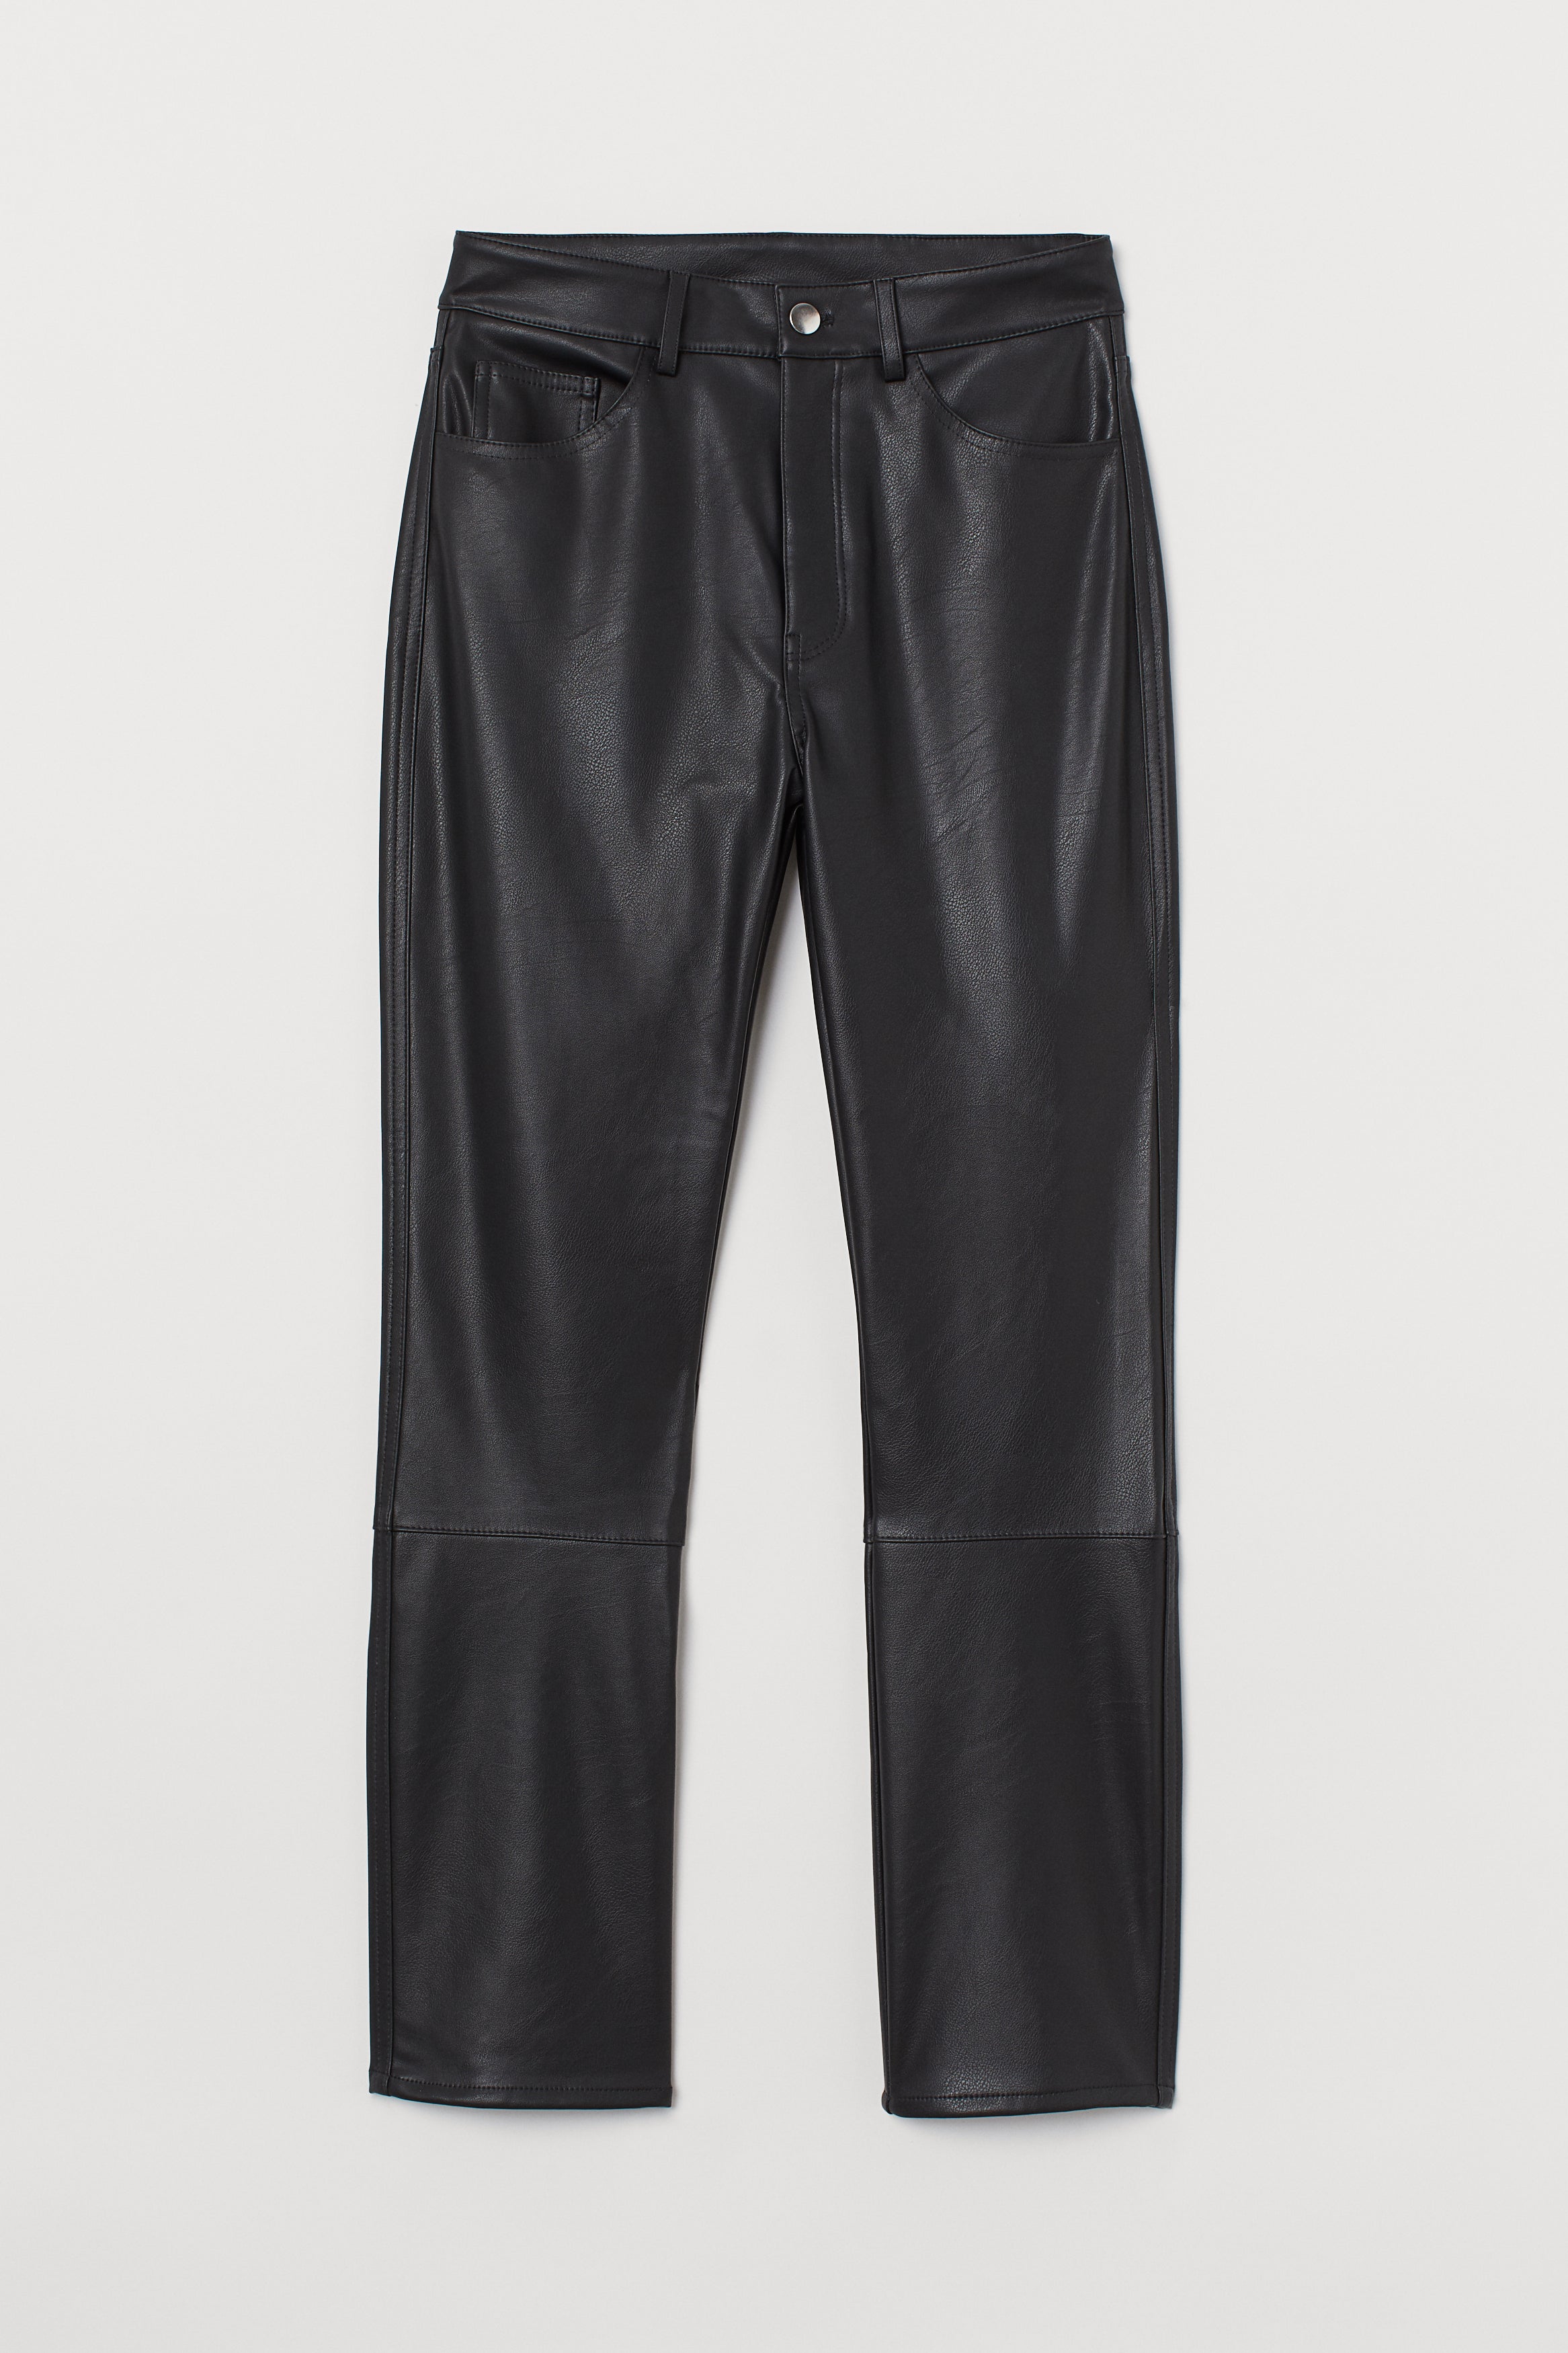 black leatherette trousers